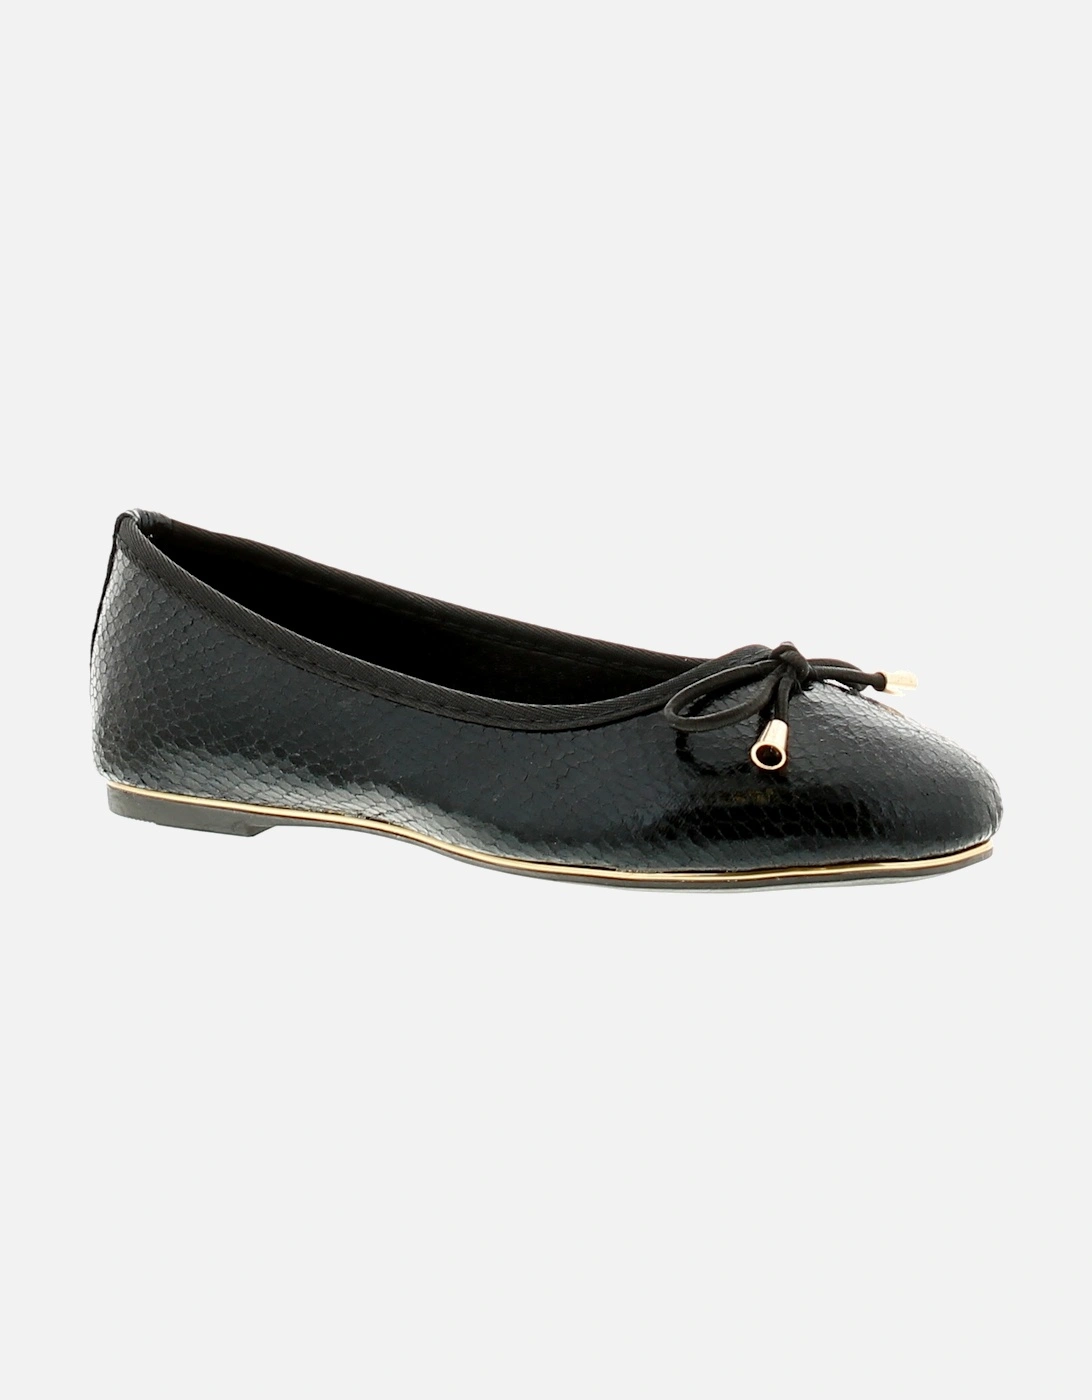 Girls Shoes School Iris Slip On black UK Size, 6 of 5